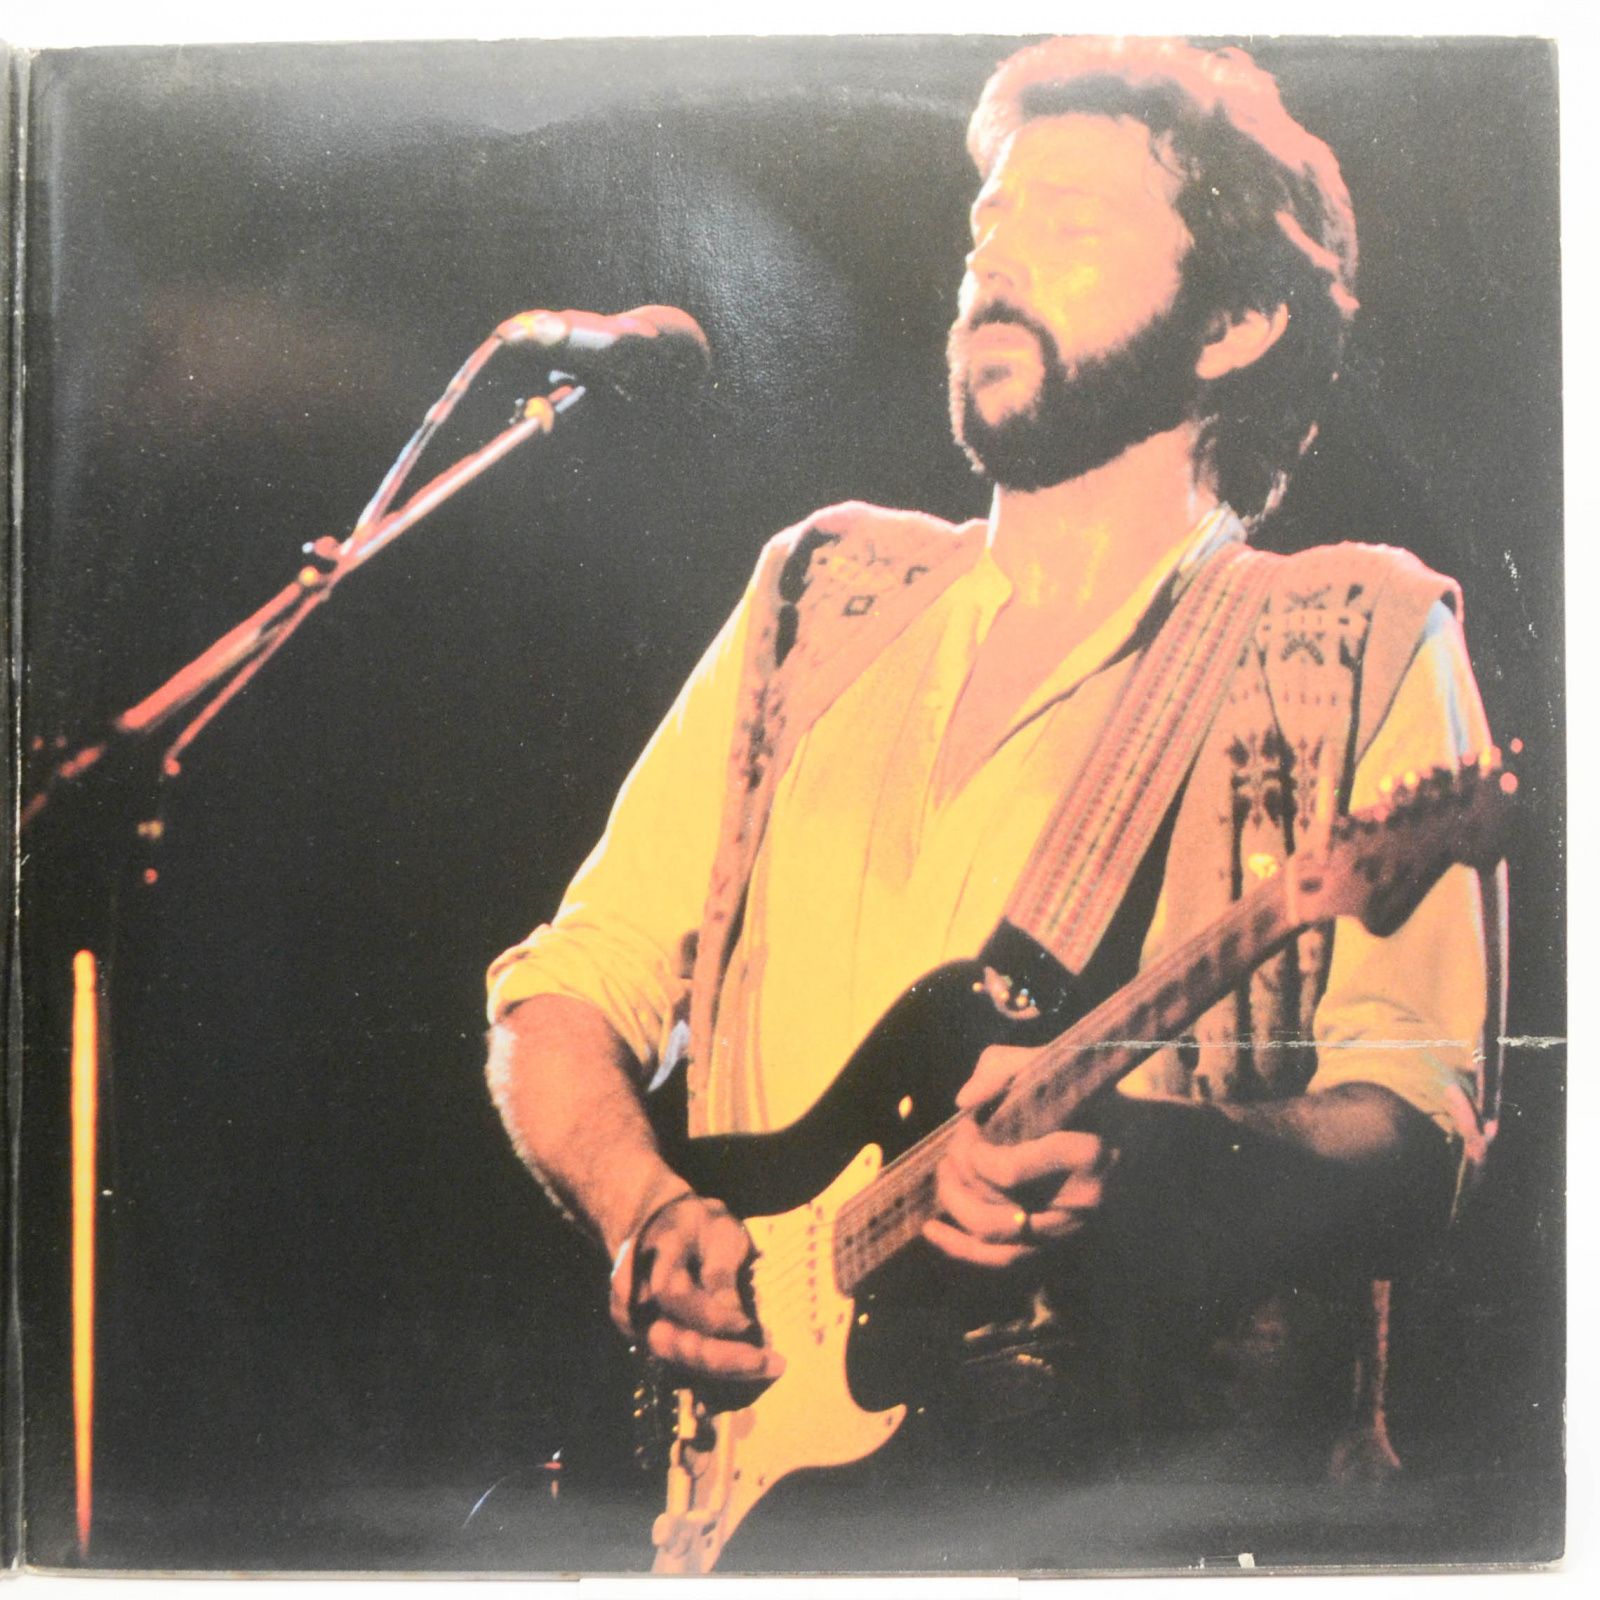 Eric Clapton — Just One Night (2LP), 1980